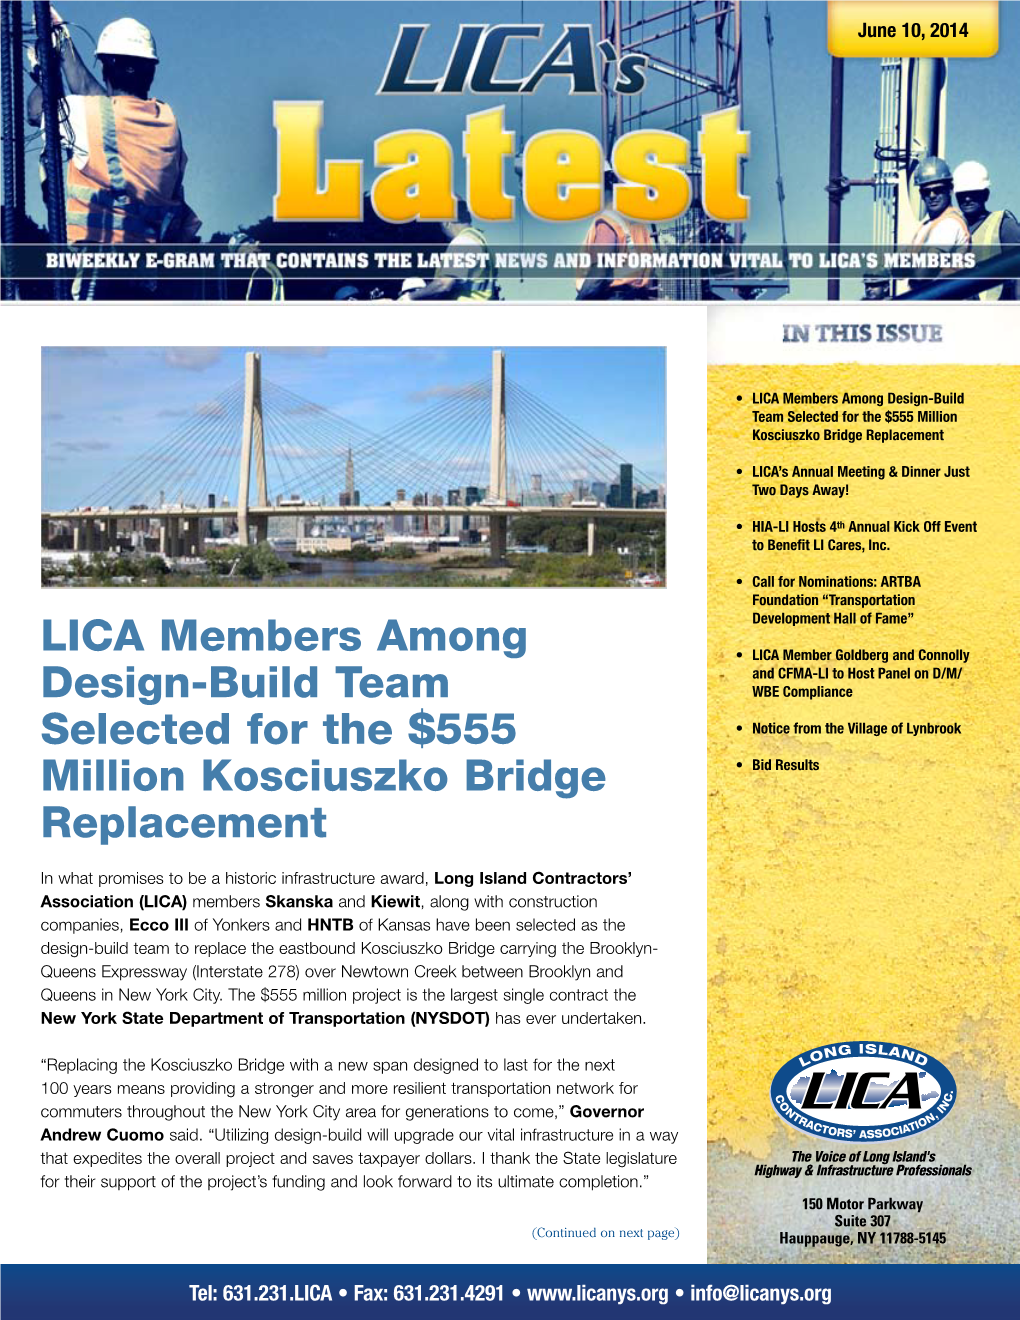 LICA Members Among Design-Build Team Selected for the $555 Million Kosciuszko Bridge Replacement